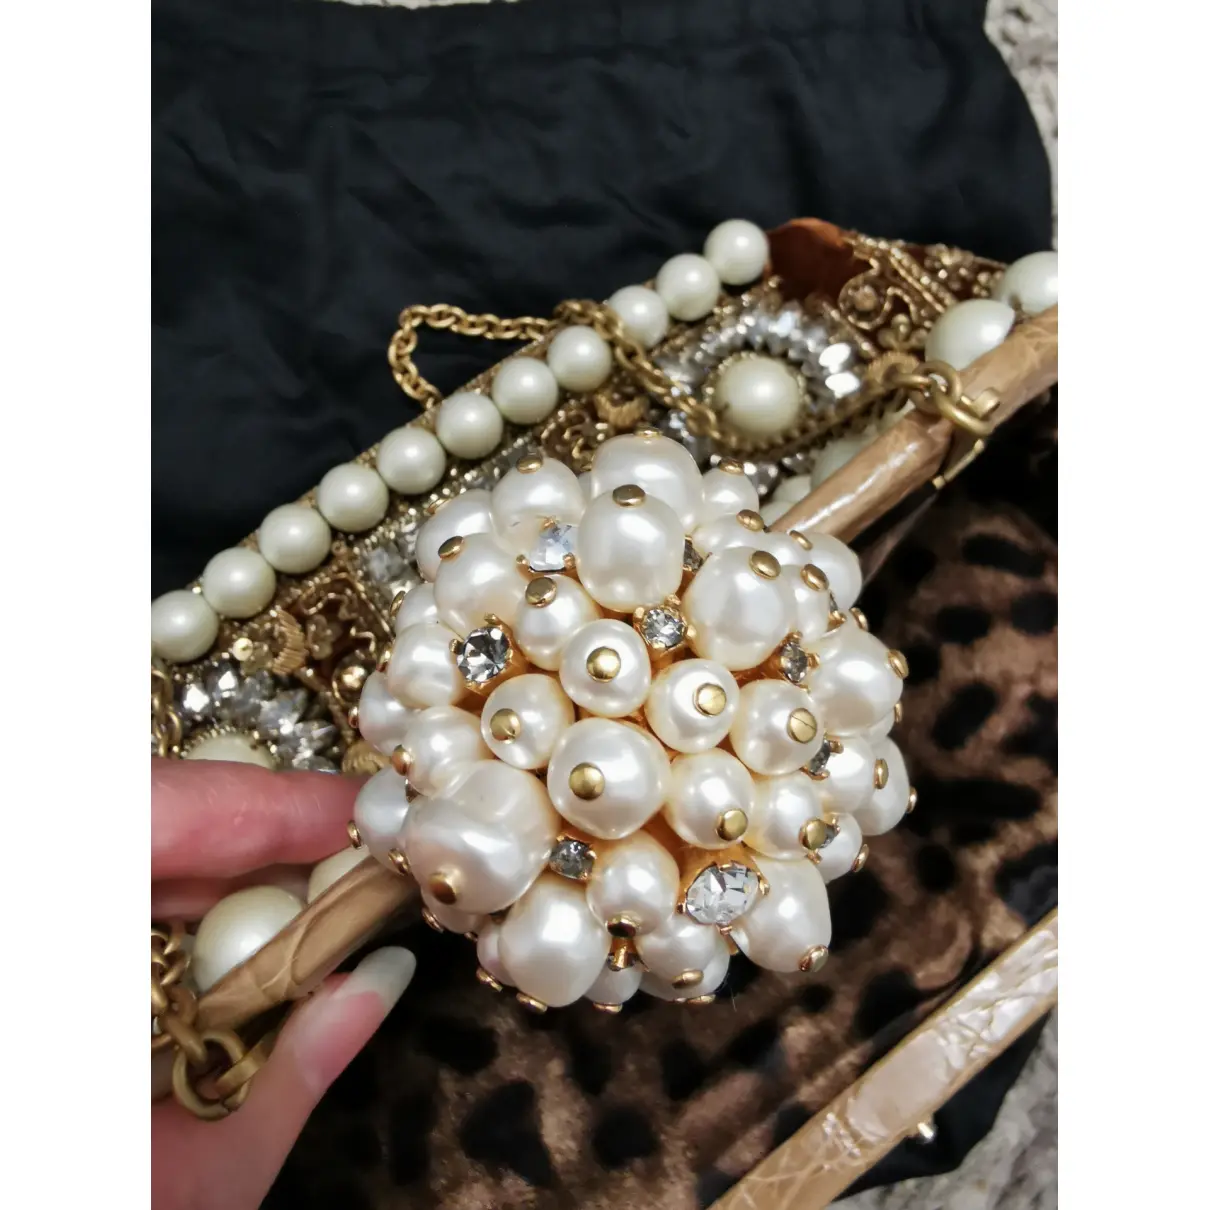 Silk clutch bag Dolce & Gabbana - Vintage